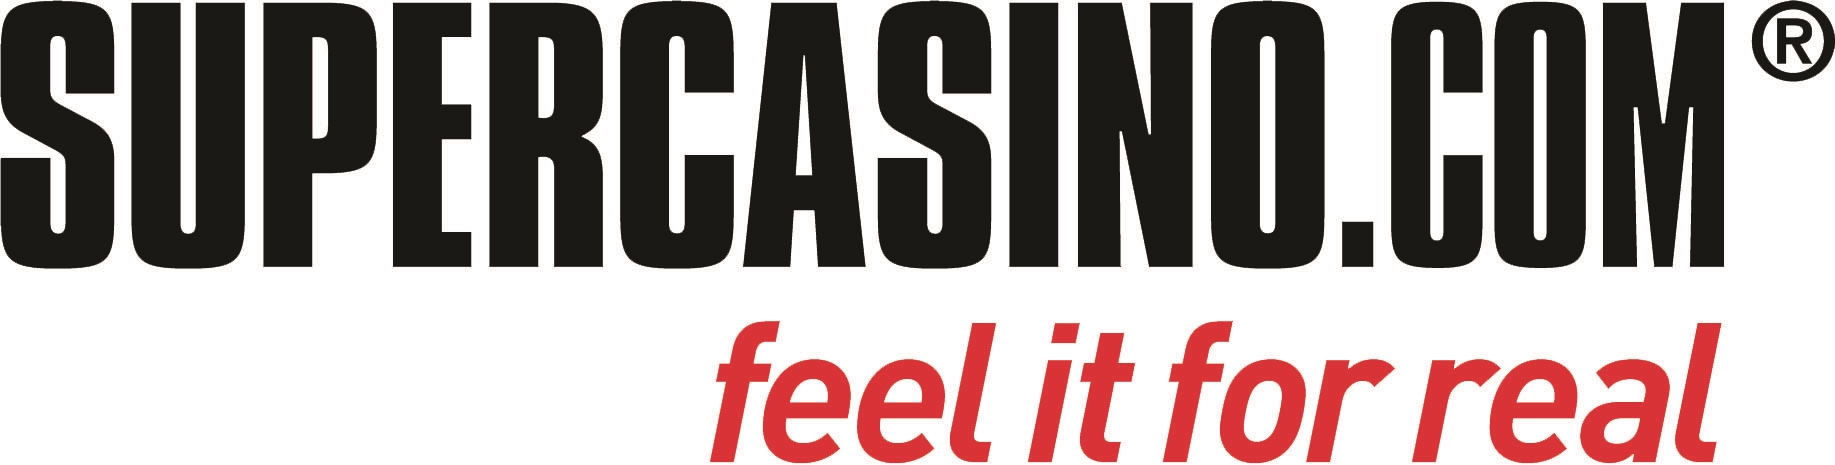 gratis casino bonus zonder storting